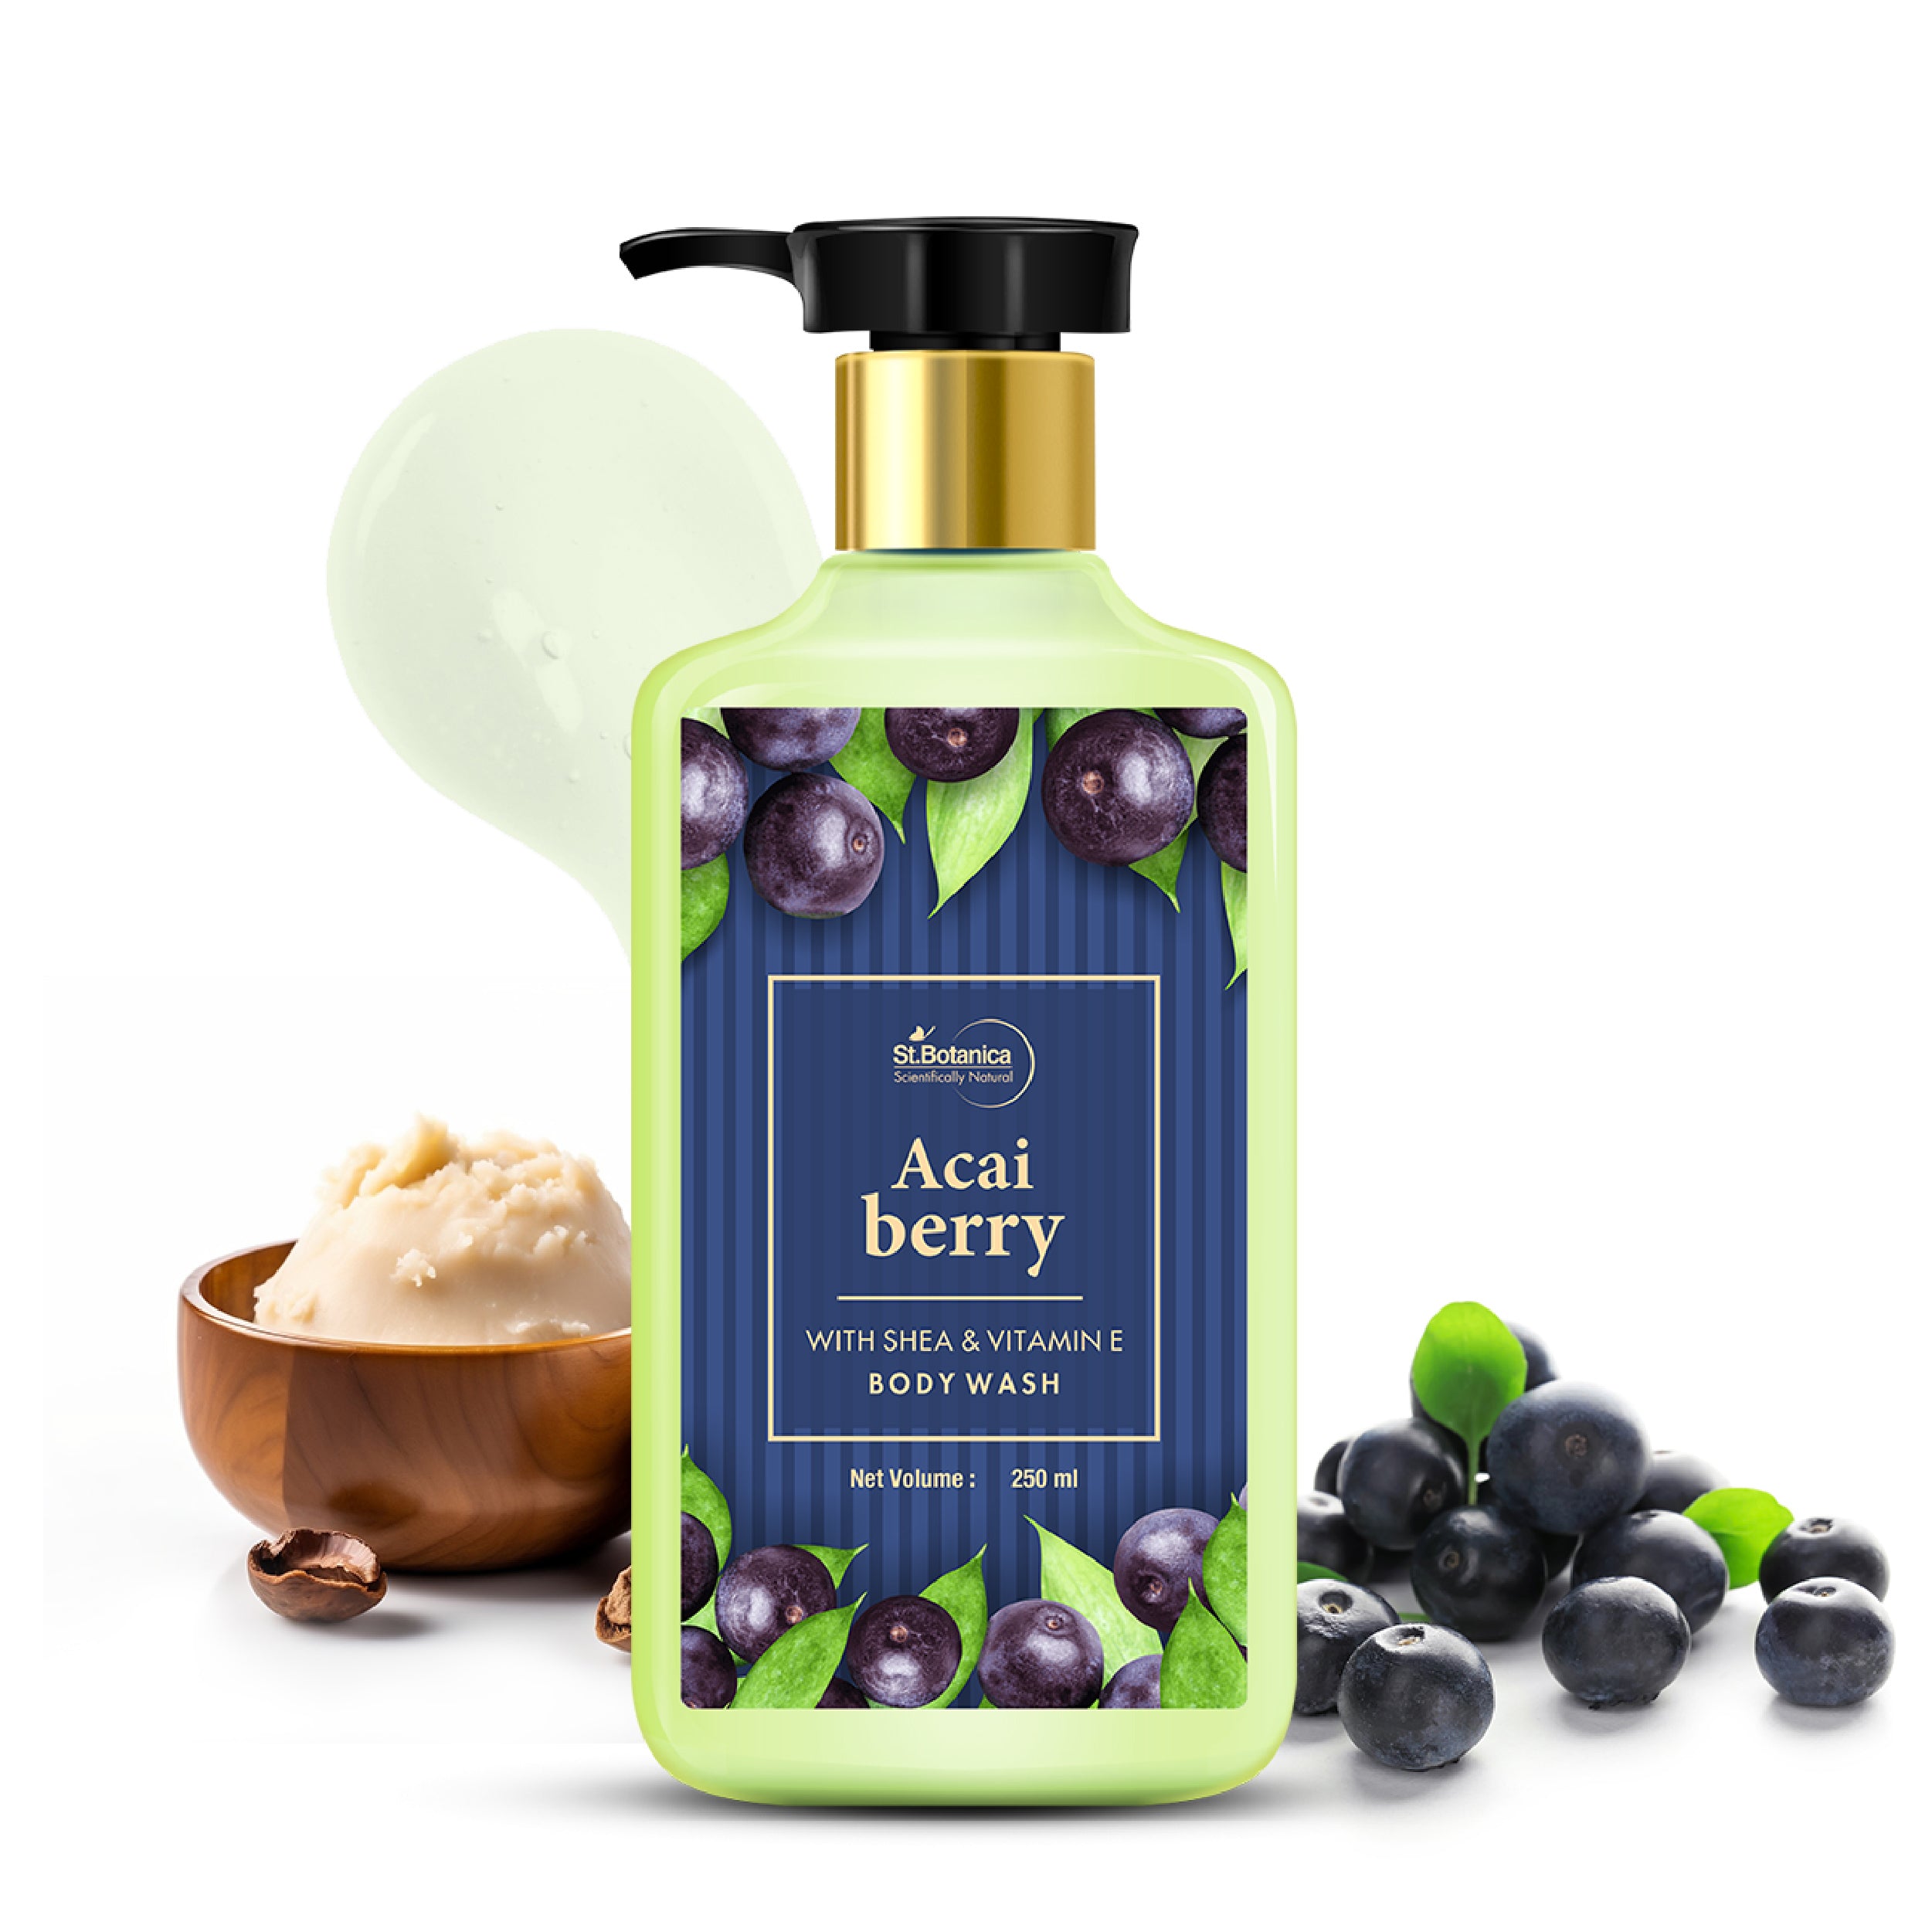 St.Botanica Acai Berry Body Wash - With Shea & Vitamin E (Shower Gel), 250 ml